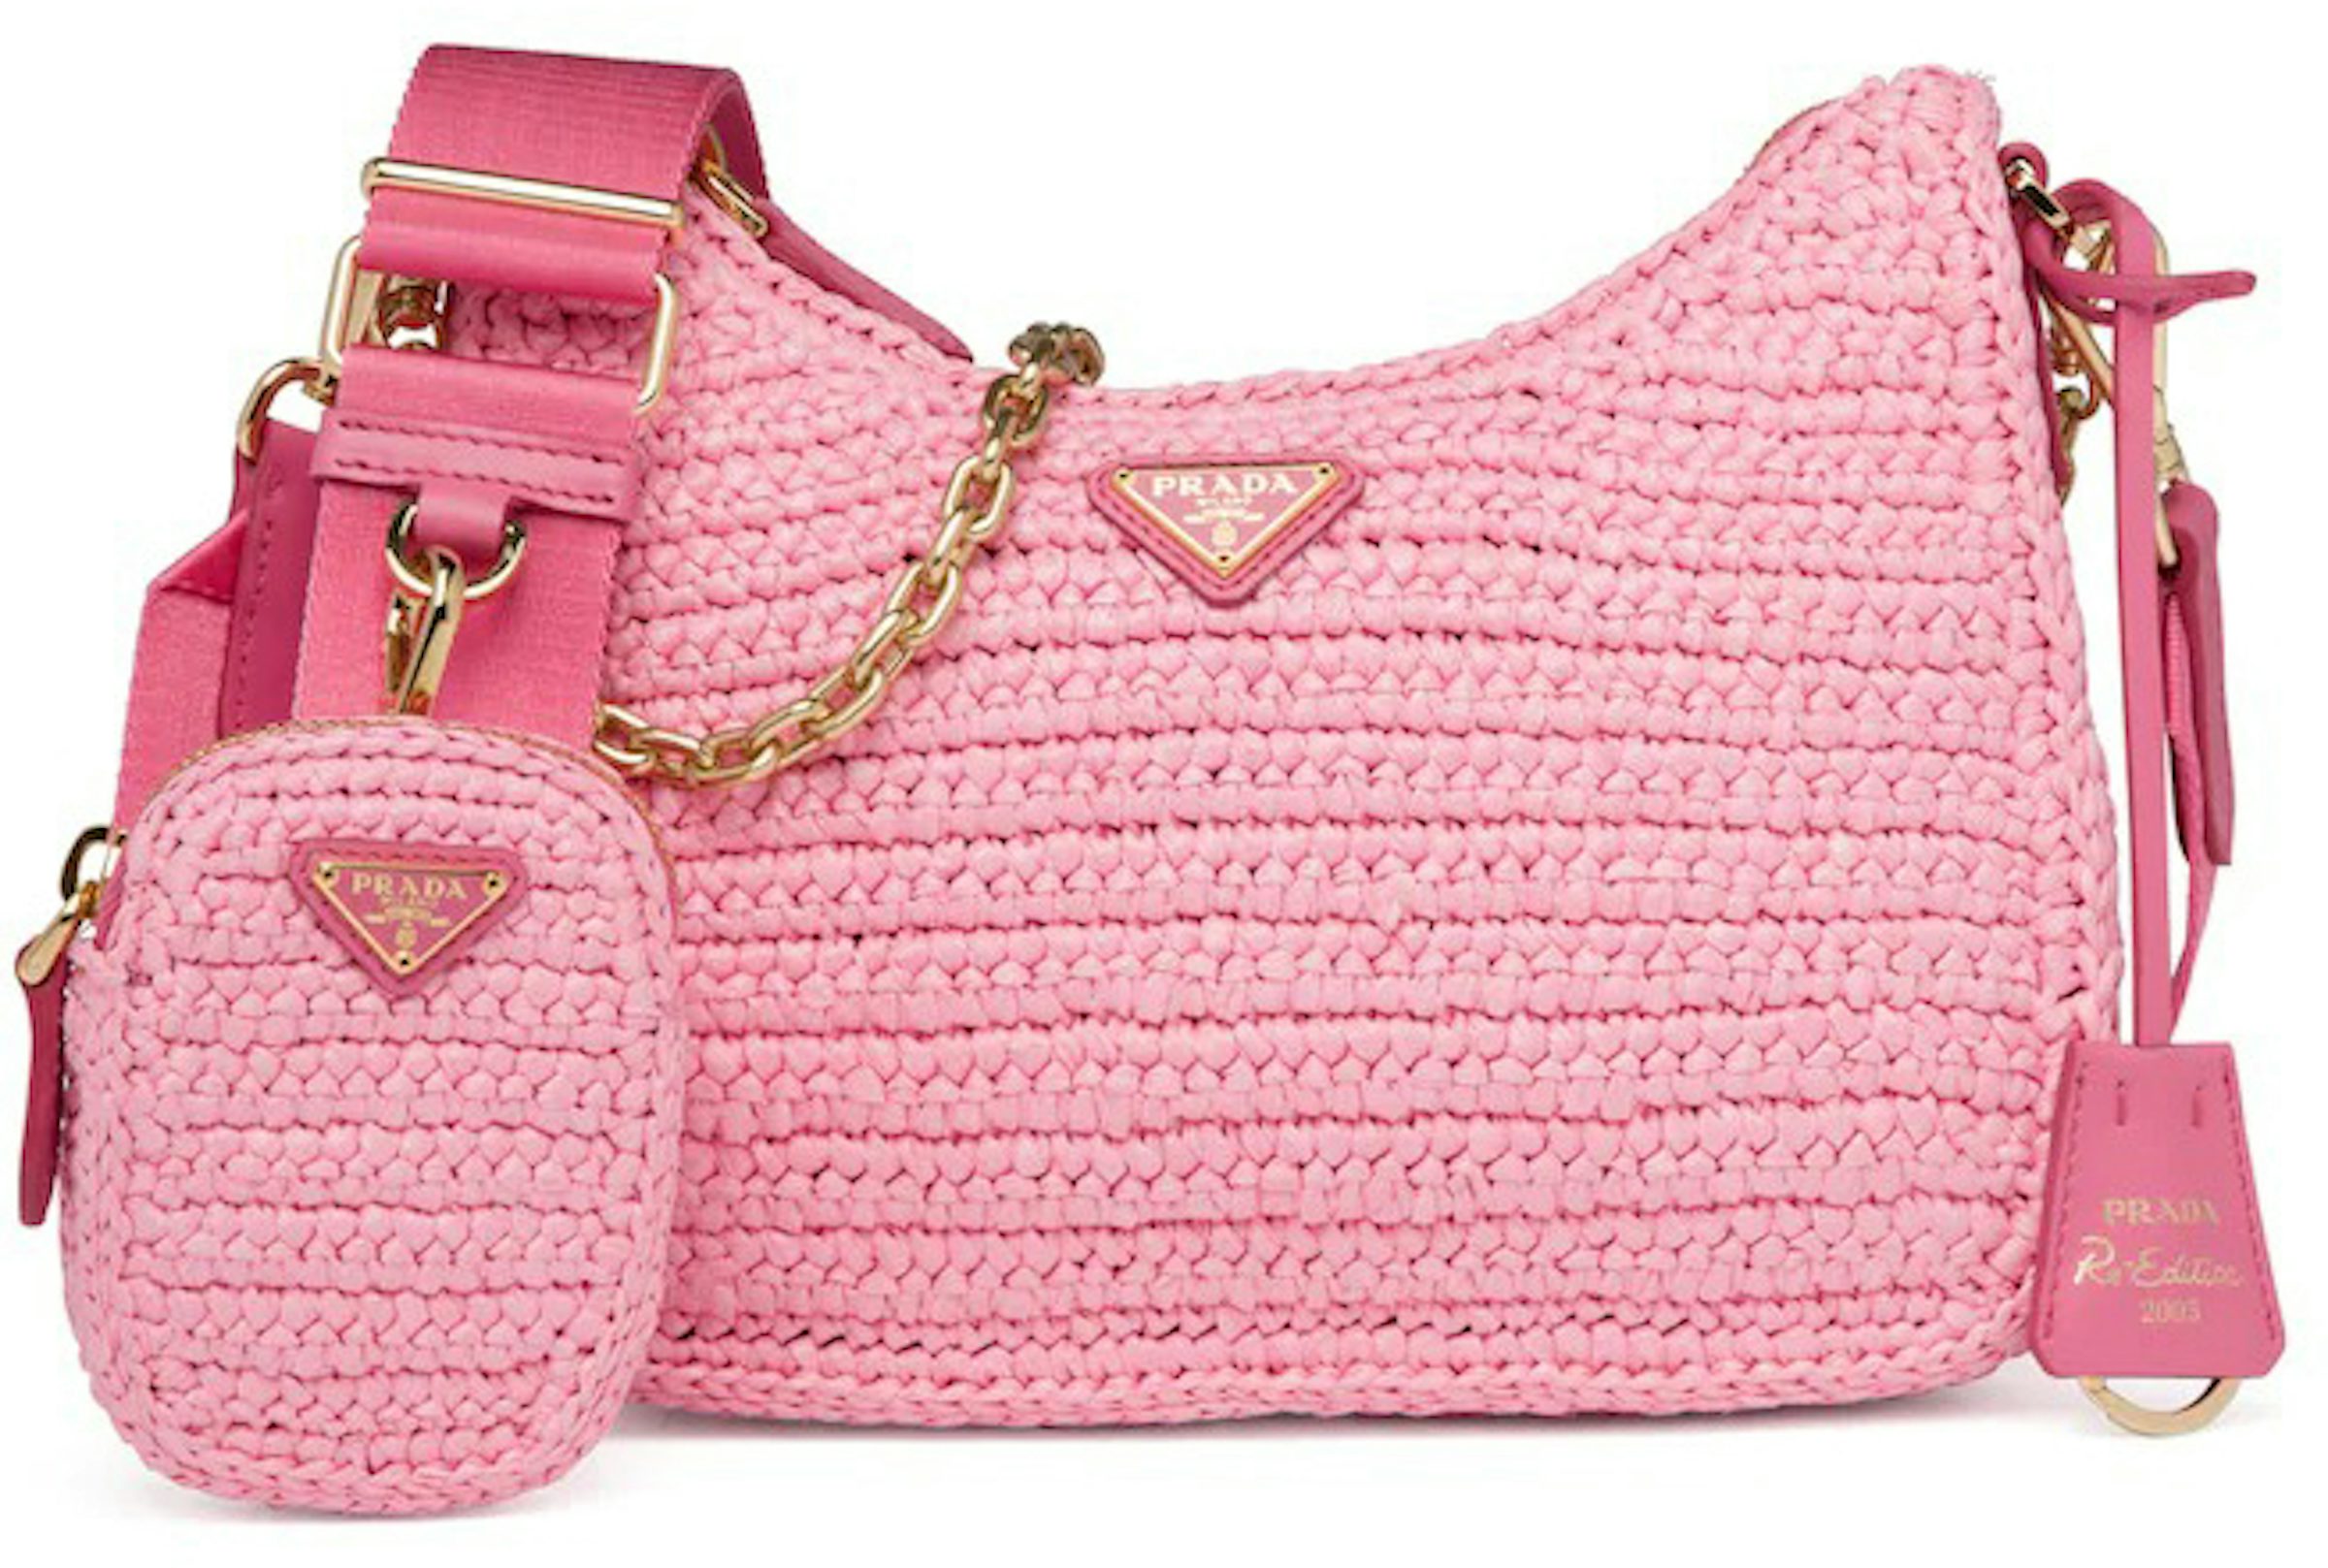 Alabaster Pink Prada Re-edition 2005 Printed Re-nylon Bag